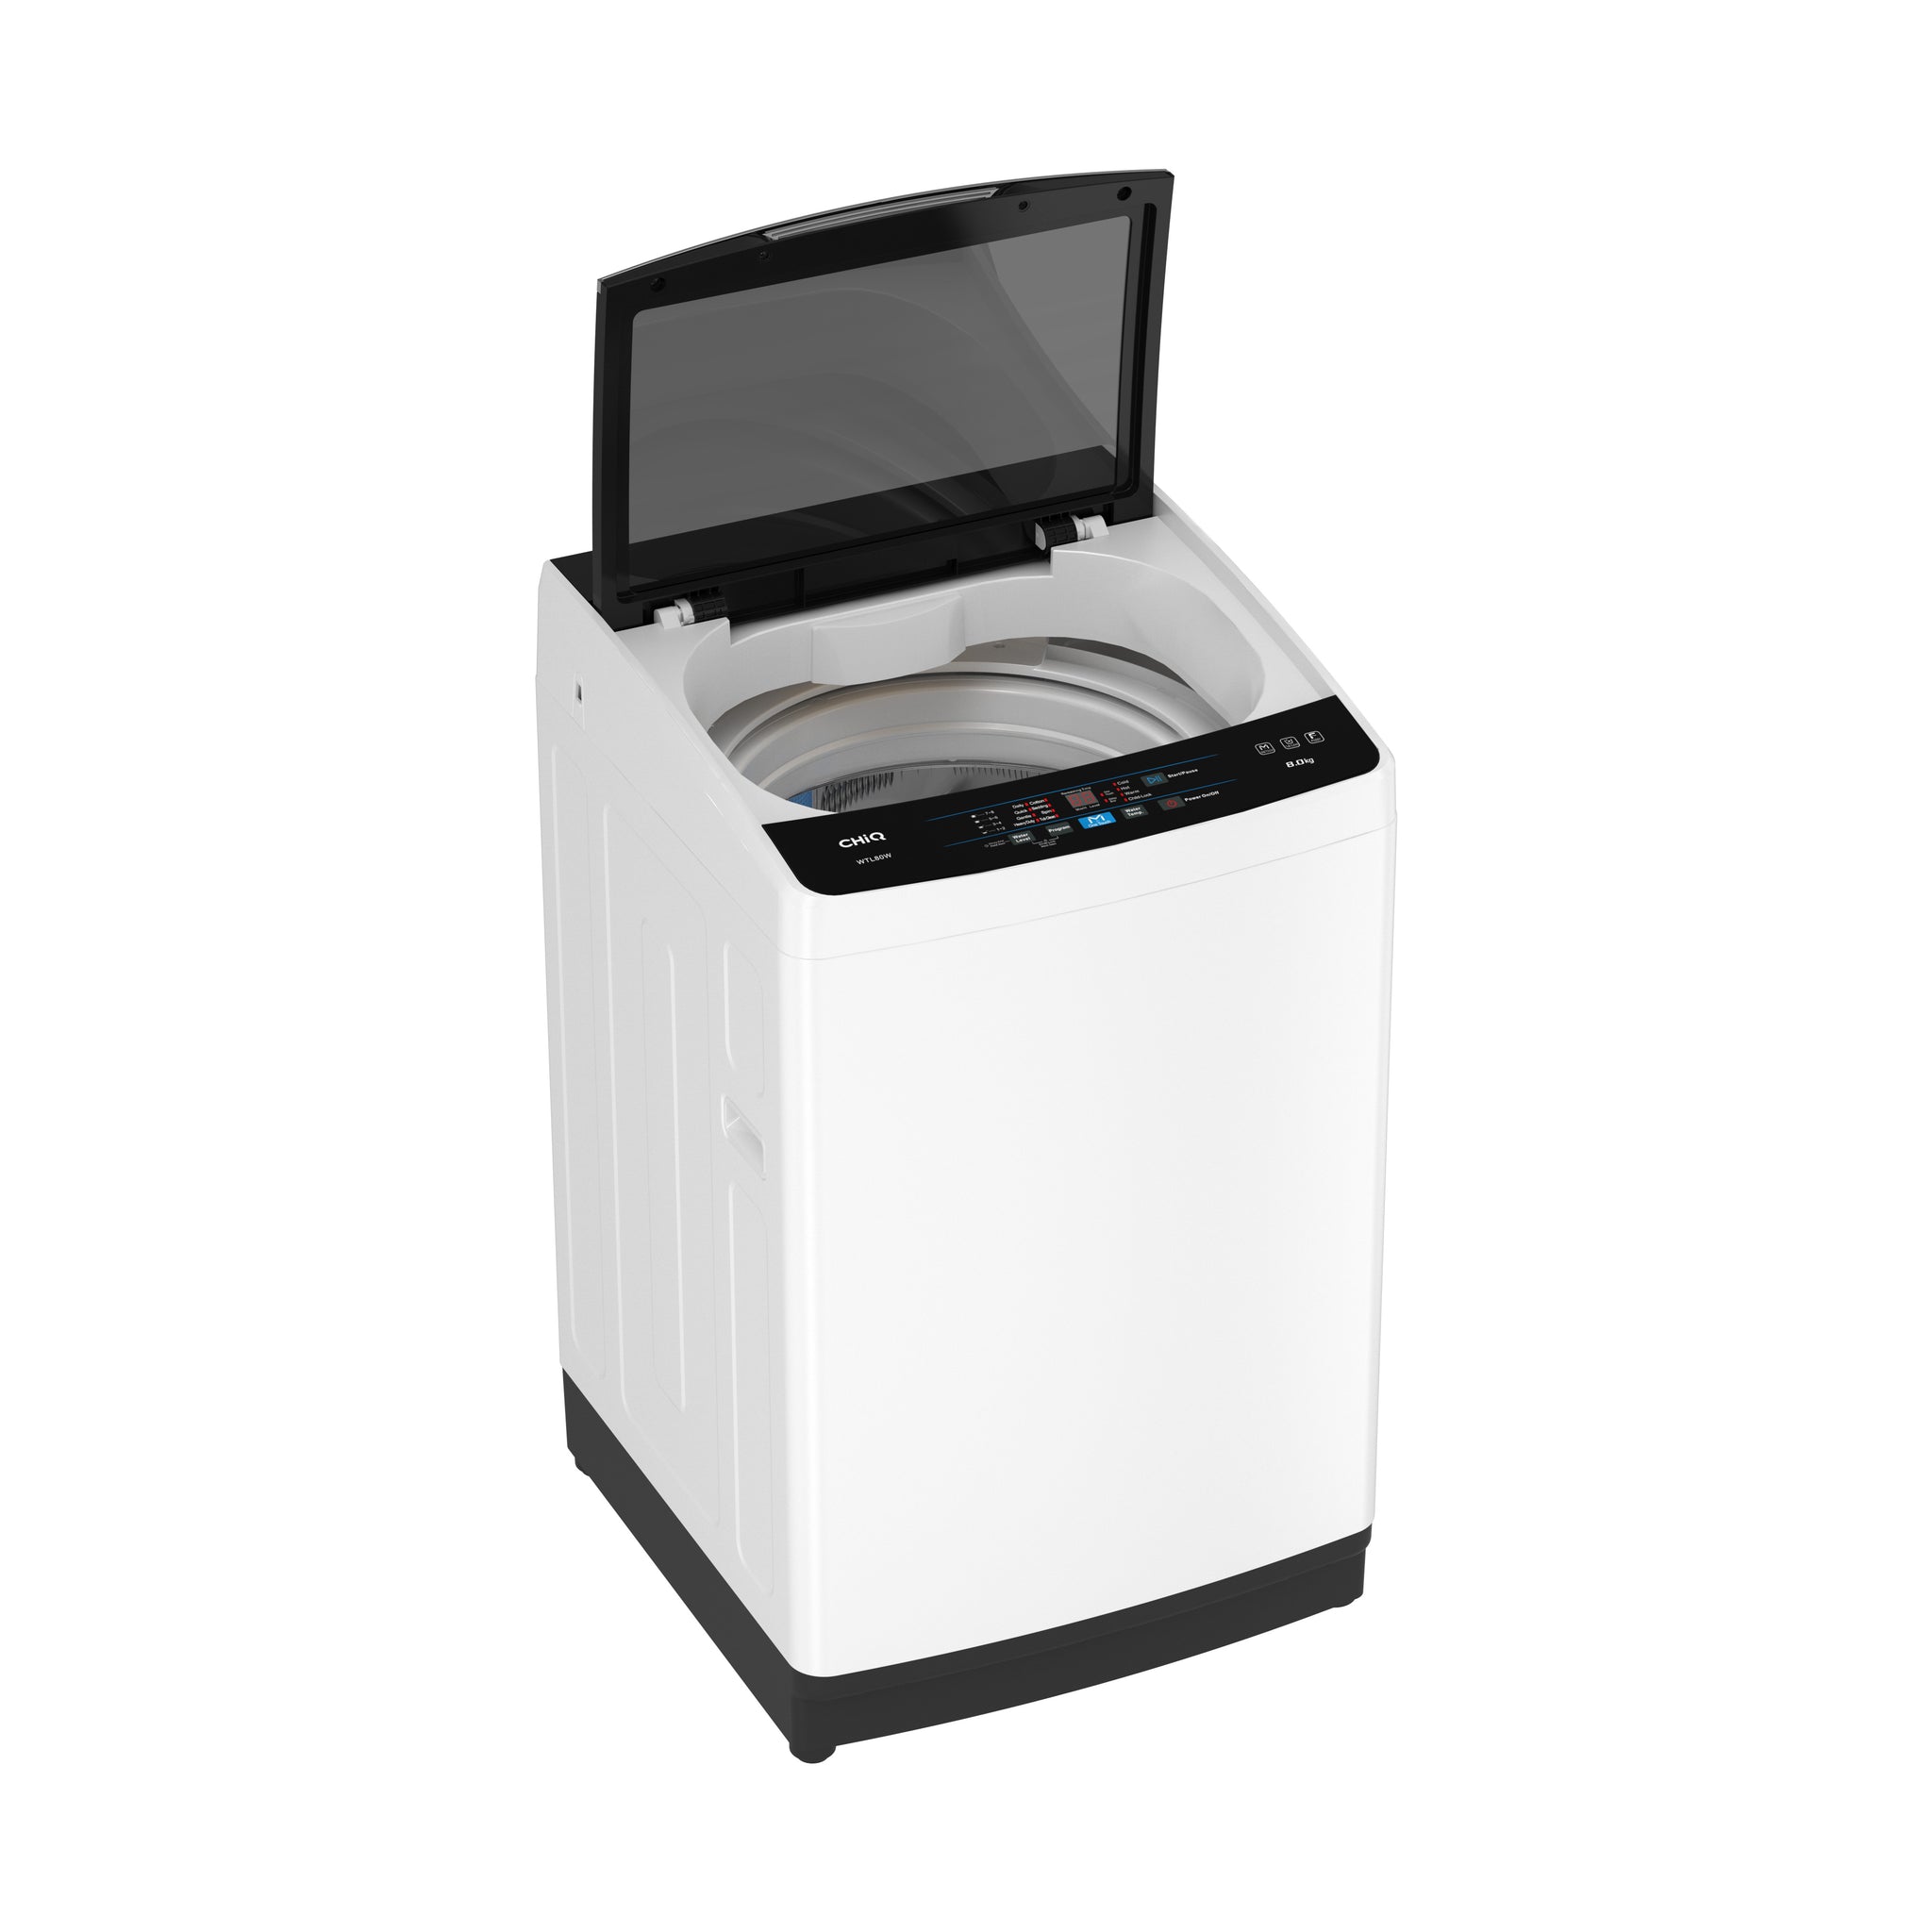 CHiQ 8kg Top Load Washing Machine Model WTL80W